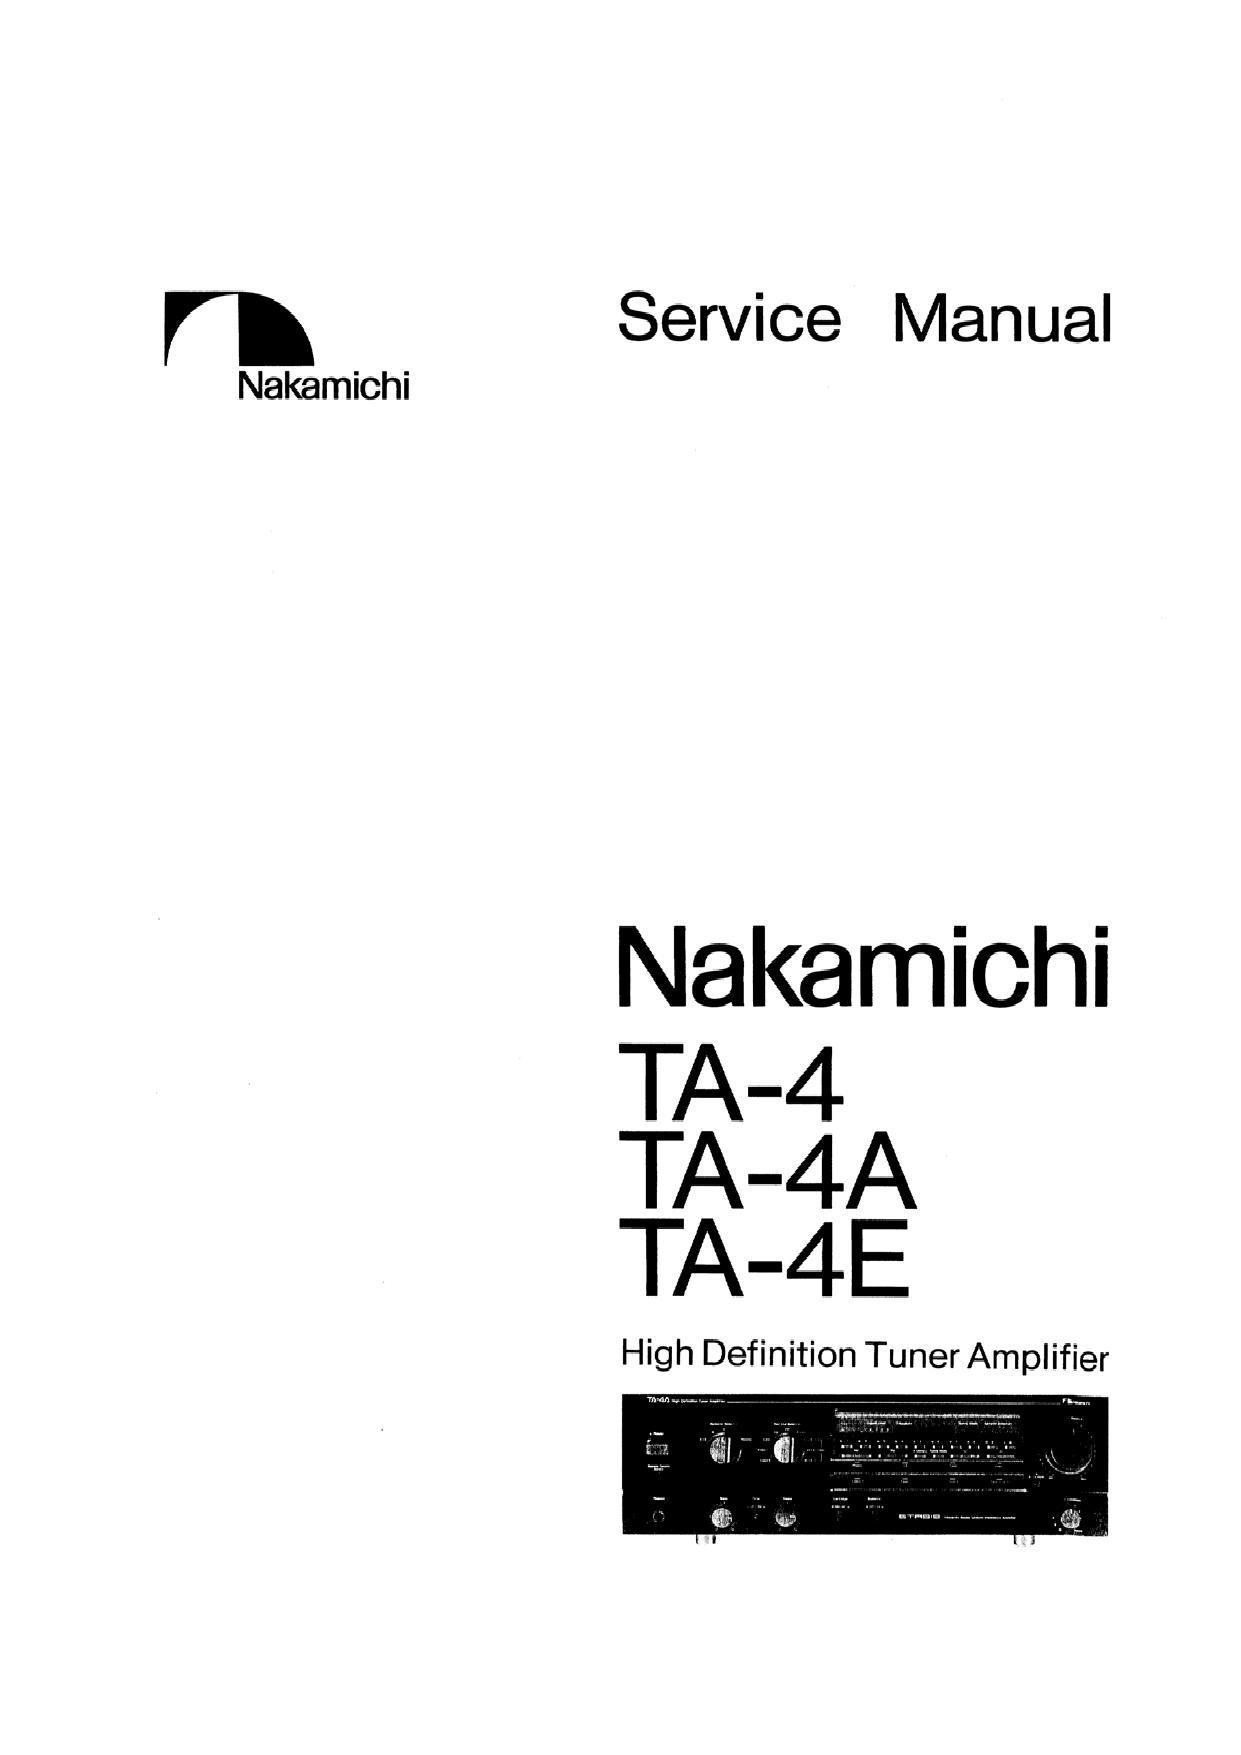 Nakamichi TA 4 A Service Manual